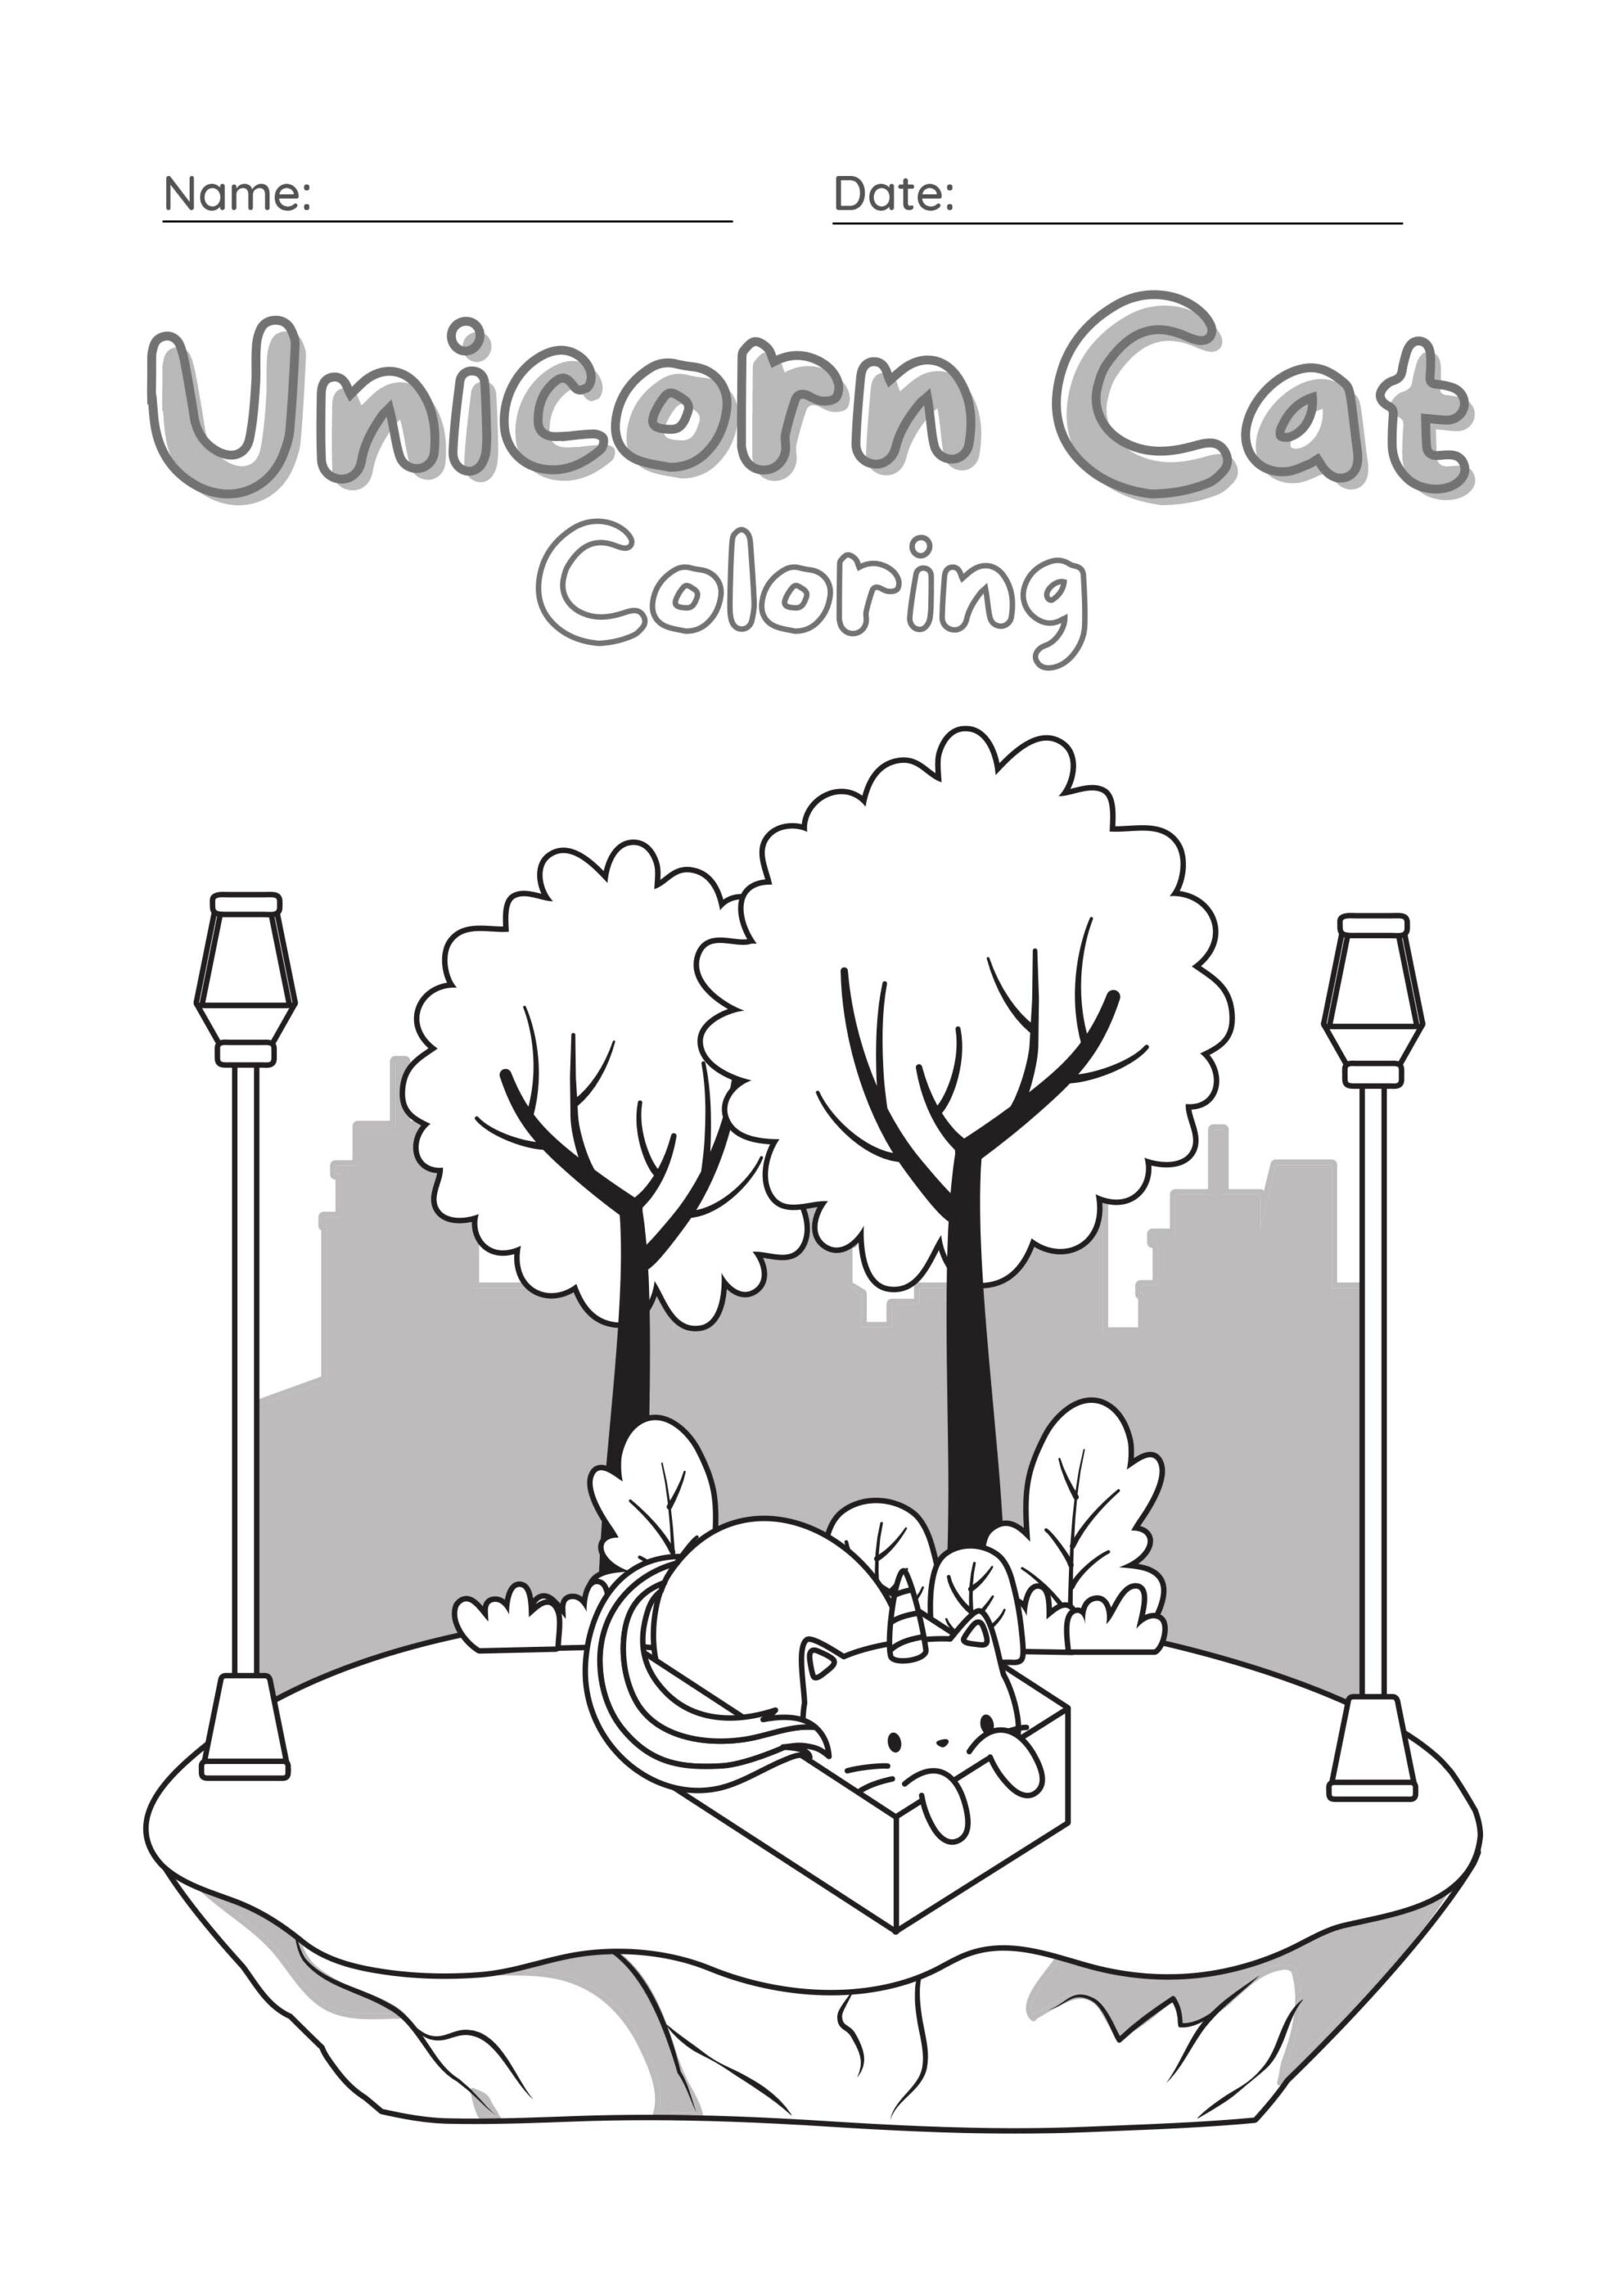 Unicorn Cat Coloring Worksheet Set 8